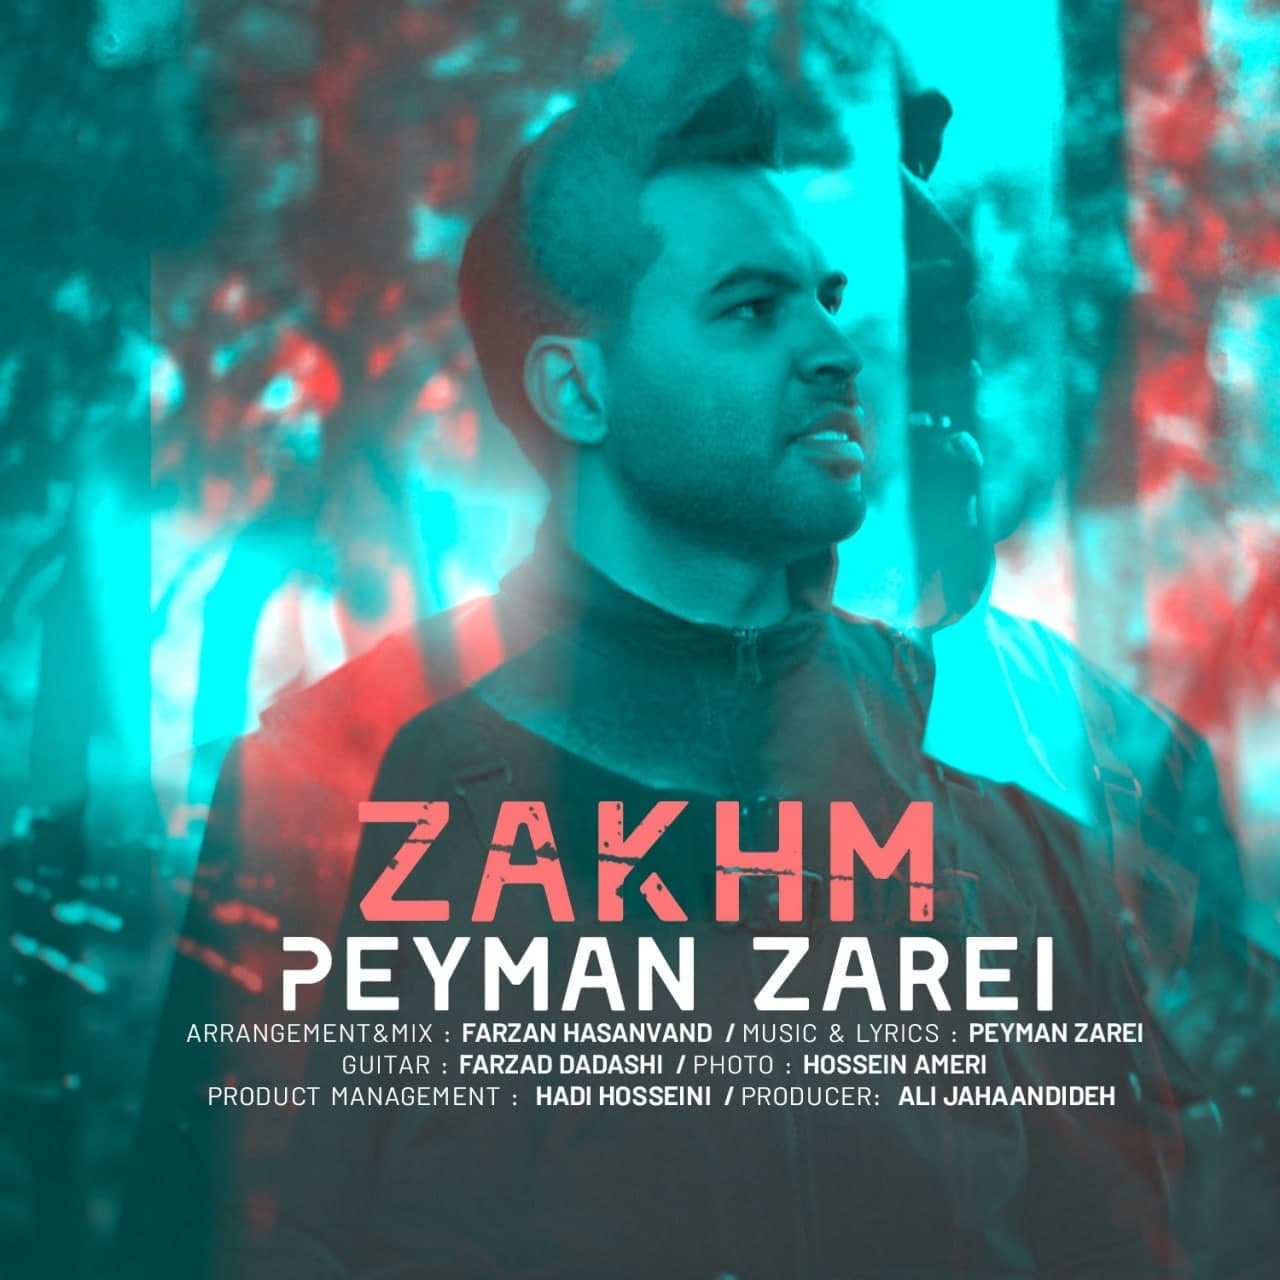 Peyman Zarei Zakhm 